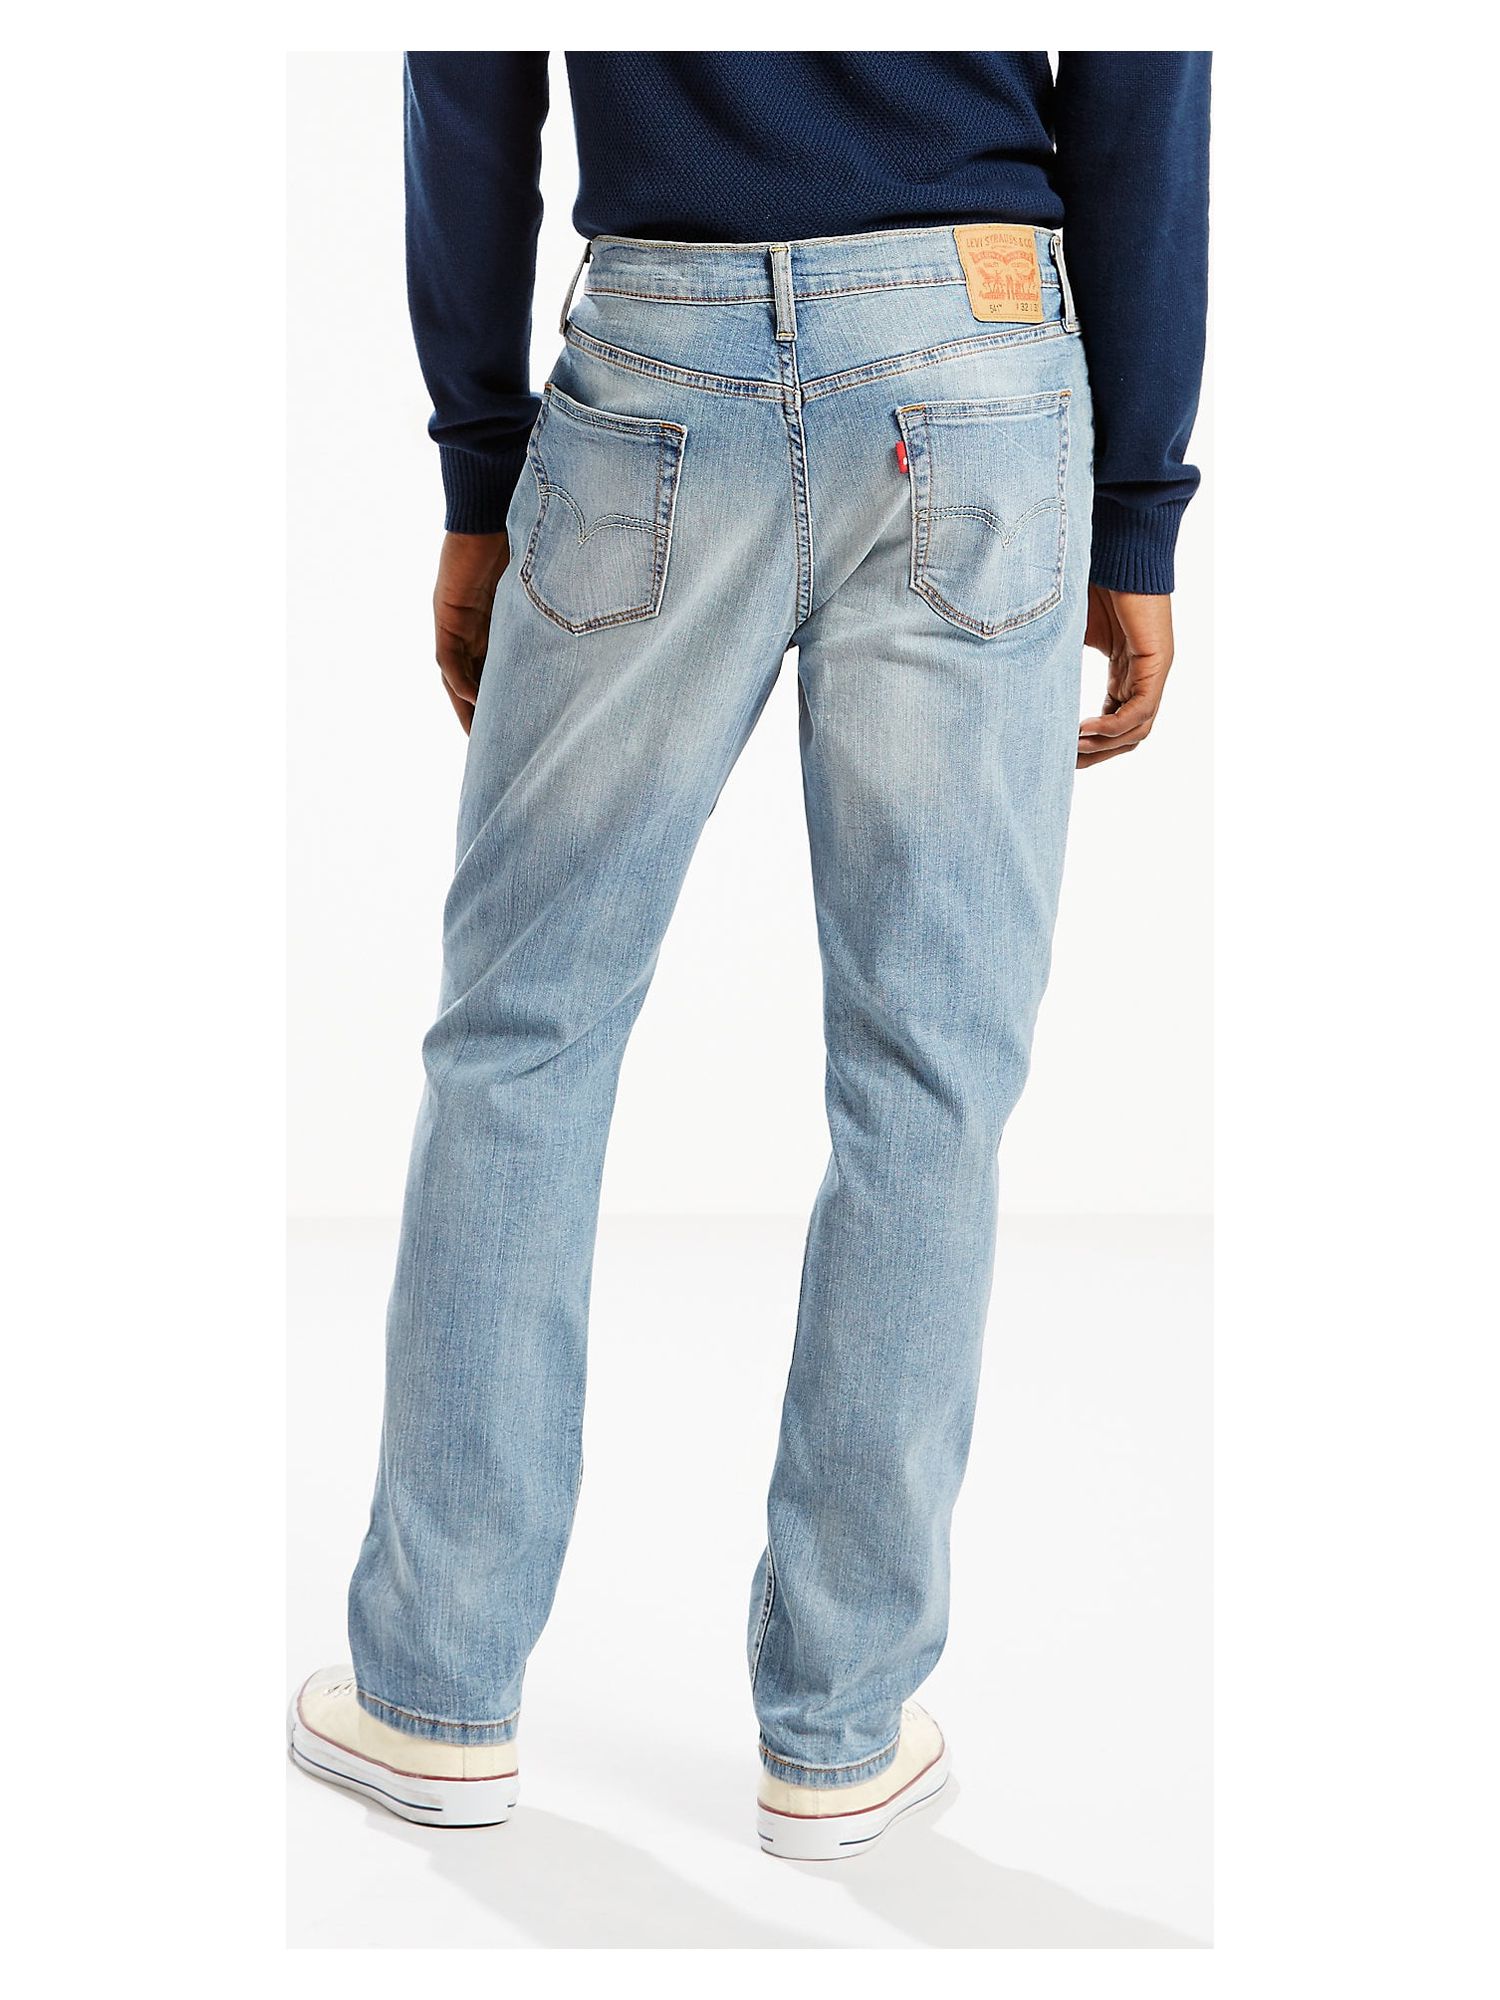 Levi's® Men's 541™ Athletic Fit Jeans - image 8 of 8